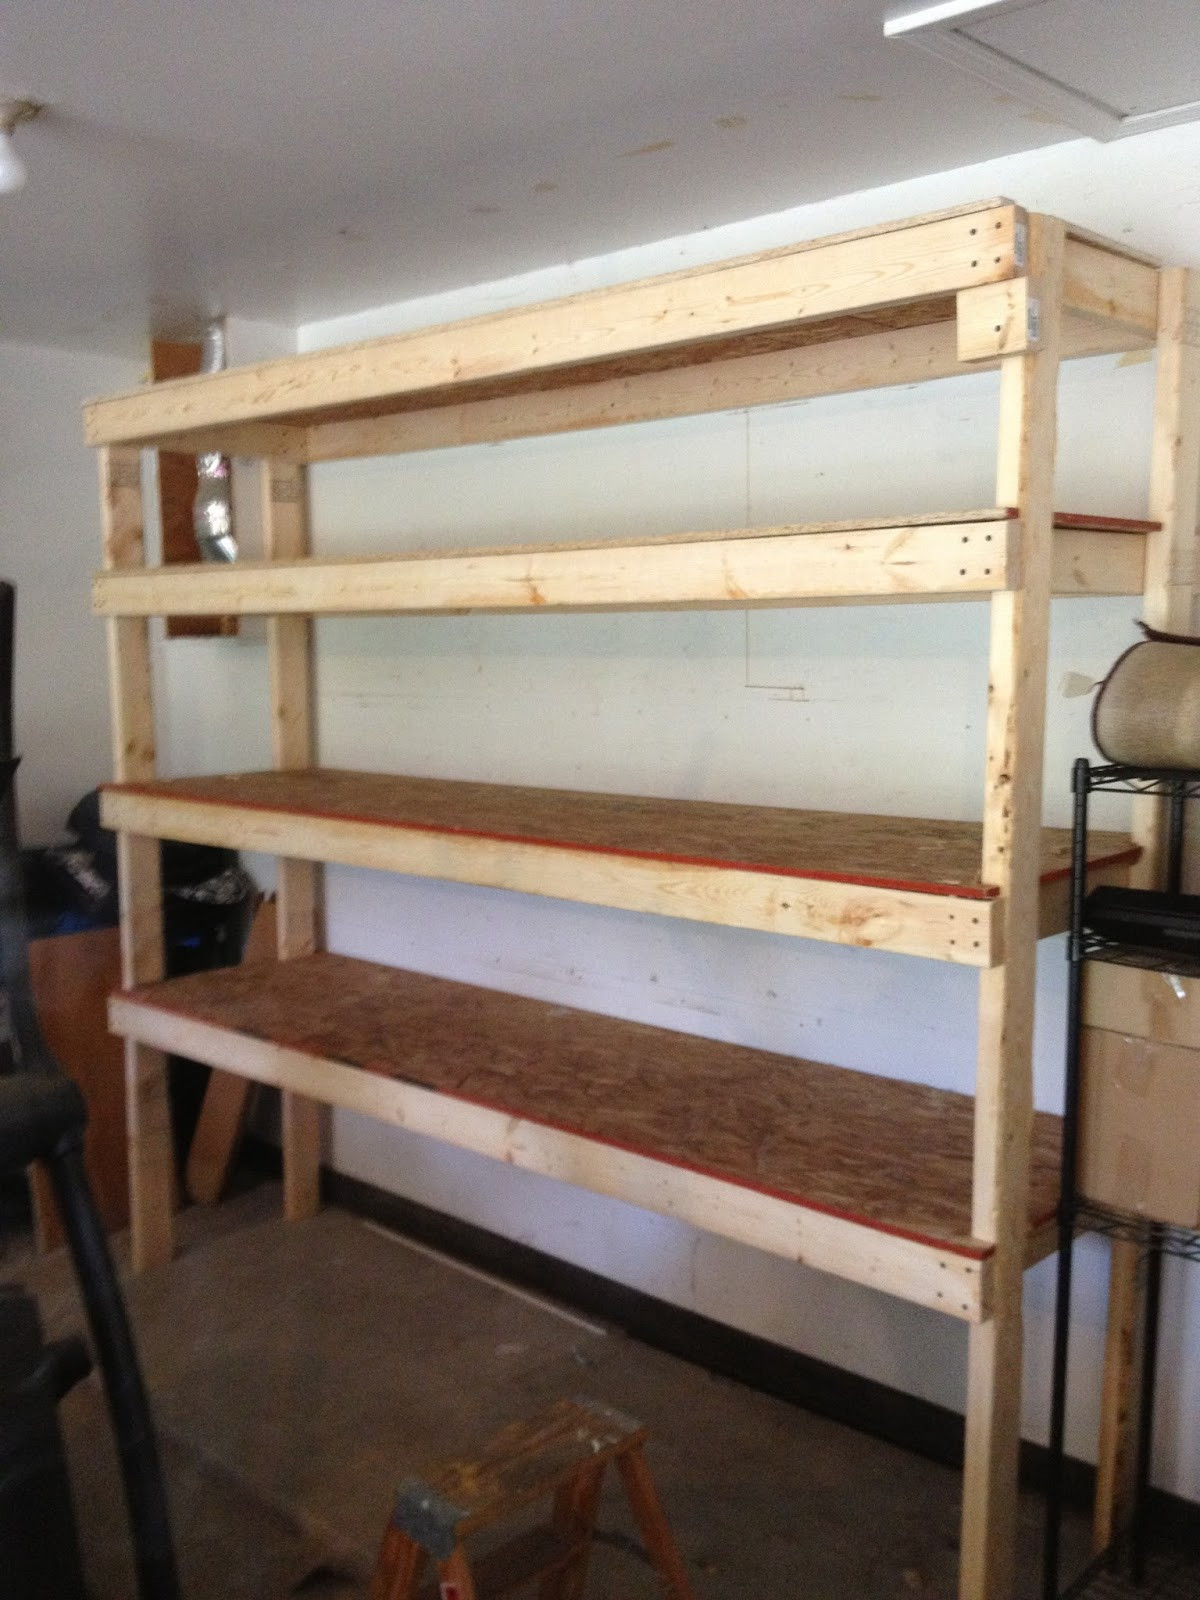 Best ideas about Diy Garage Storage Shelf
. Save or Pin 20 DIY Garage Shelving Ideas Now.